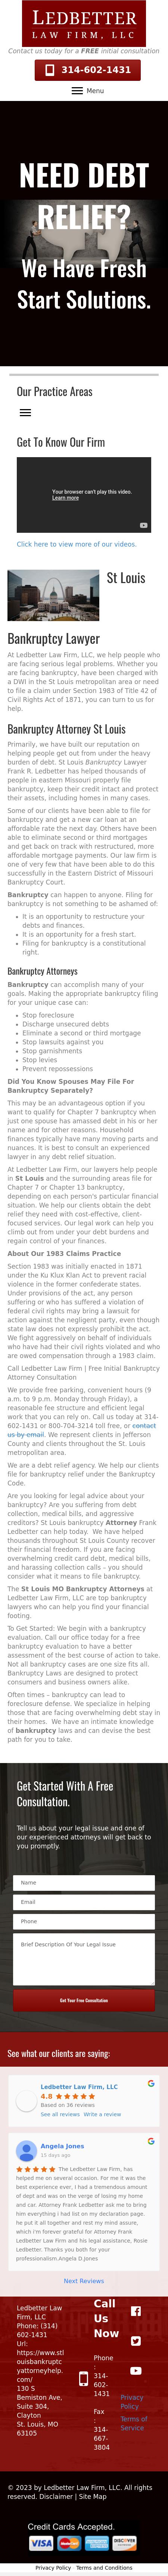 Ledbetter Law Firm, LLC - St. Louis MO Lawyers